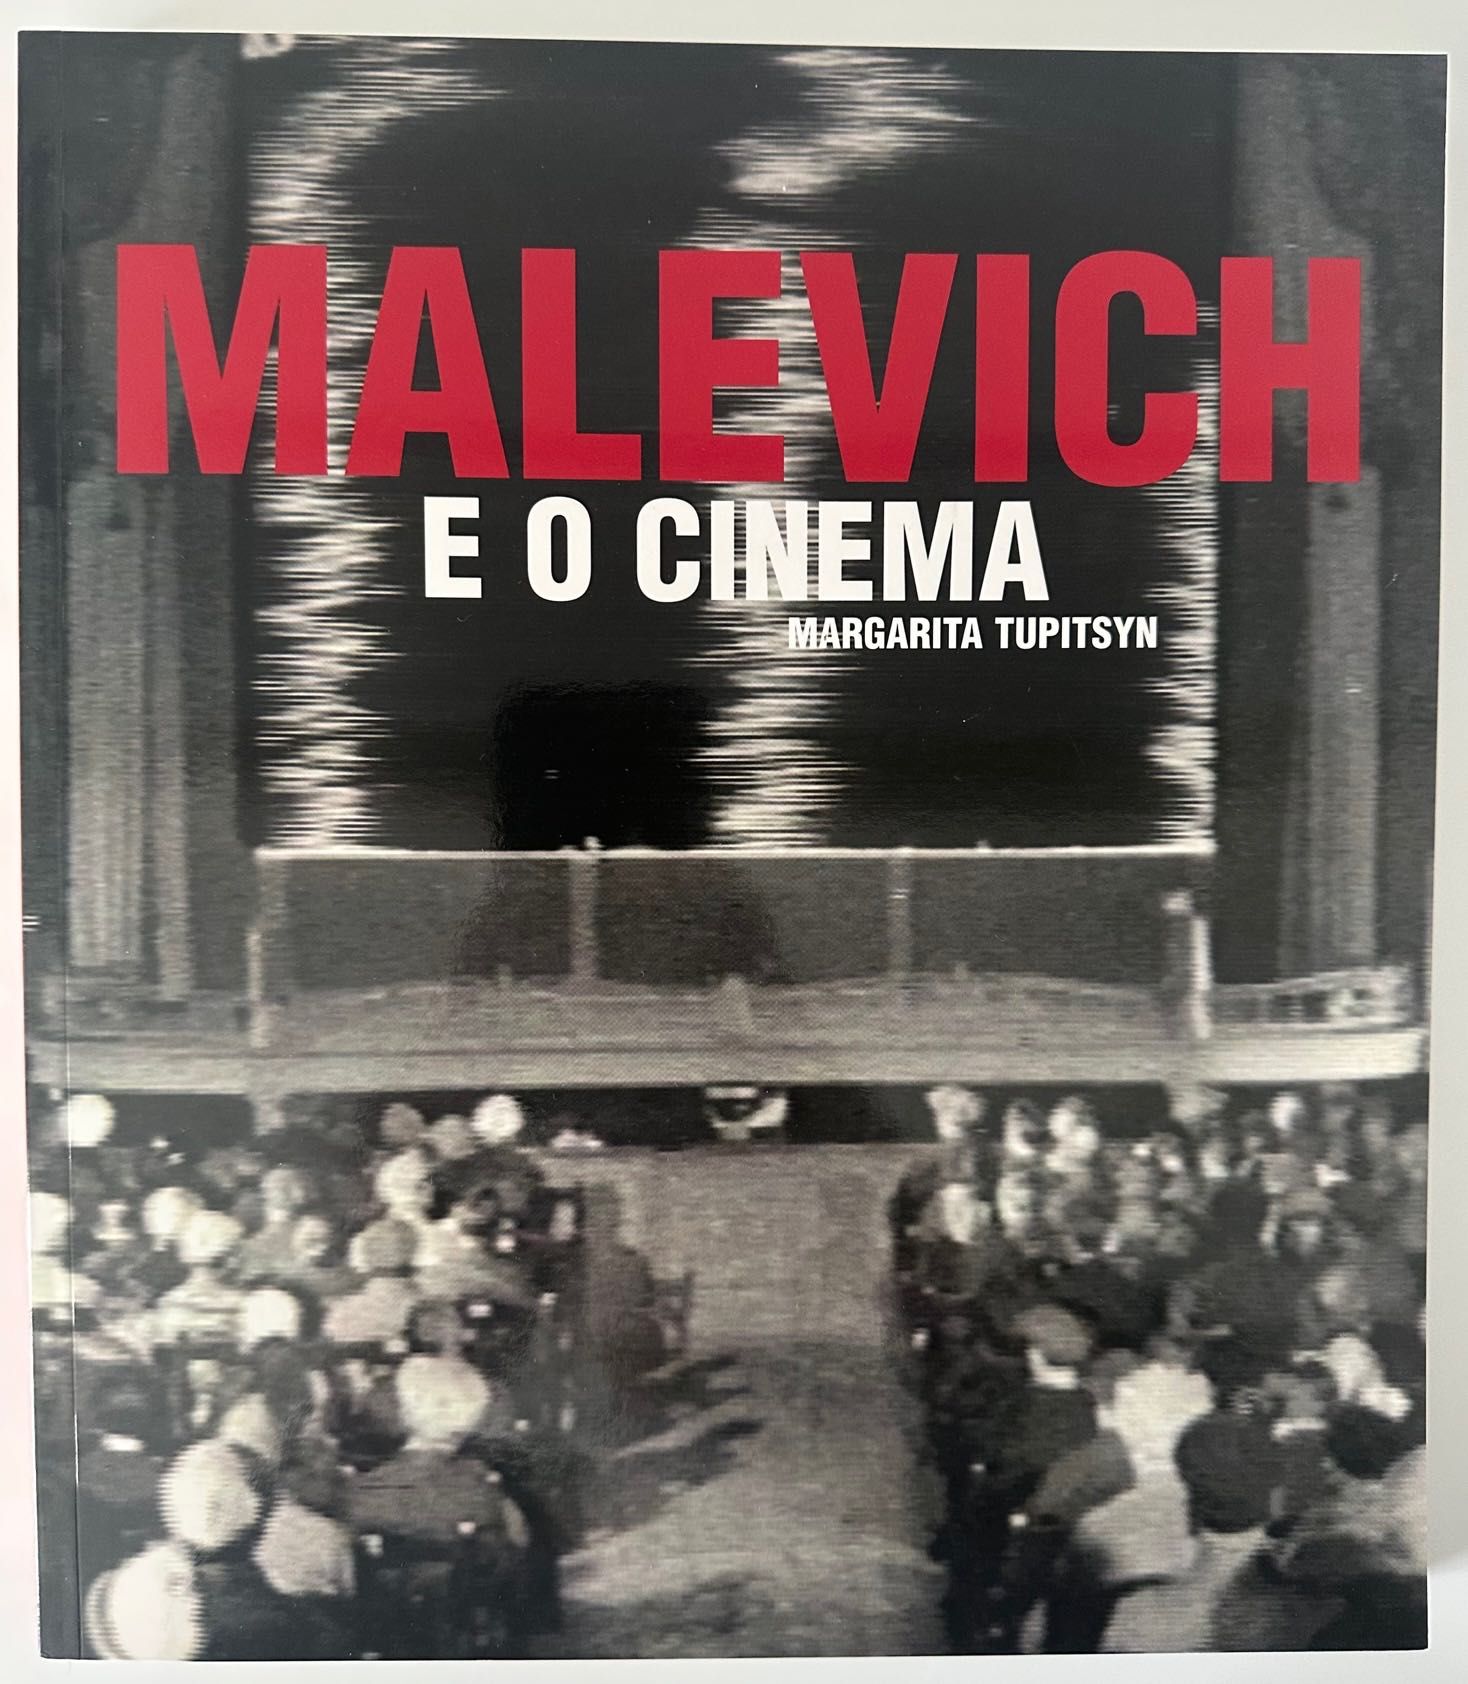 Malevich e o Cinema - Margarita Tupitsyn - 2002